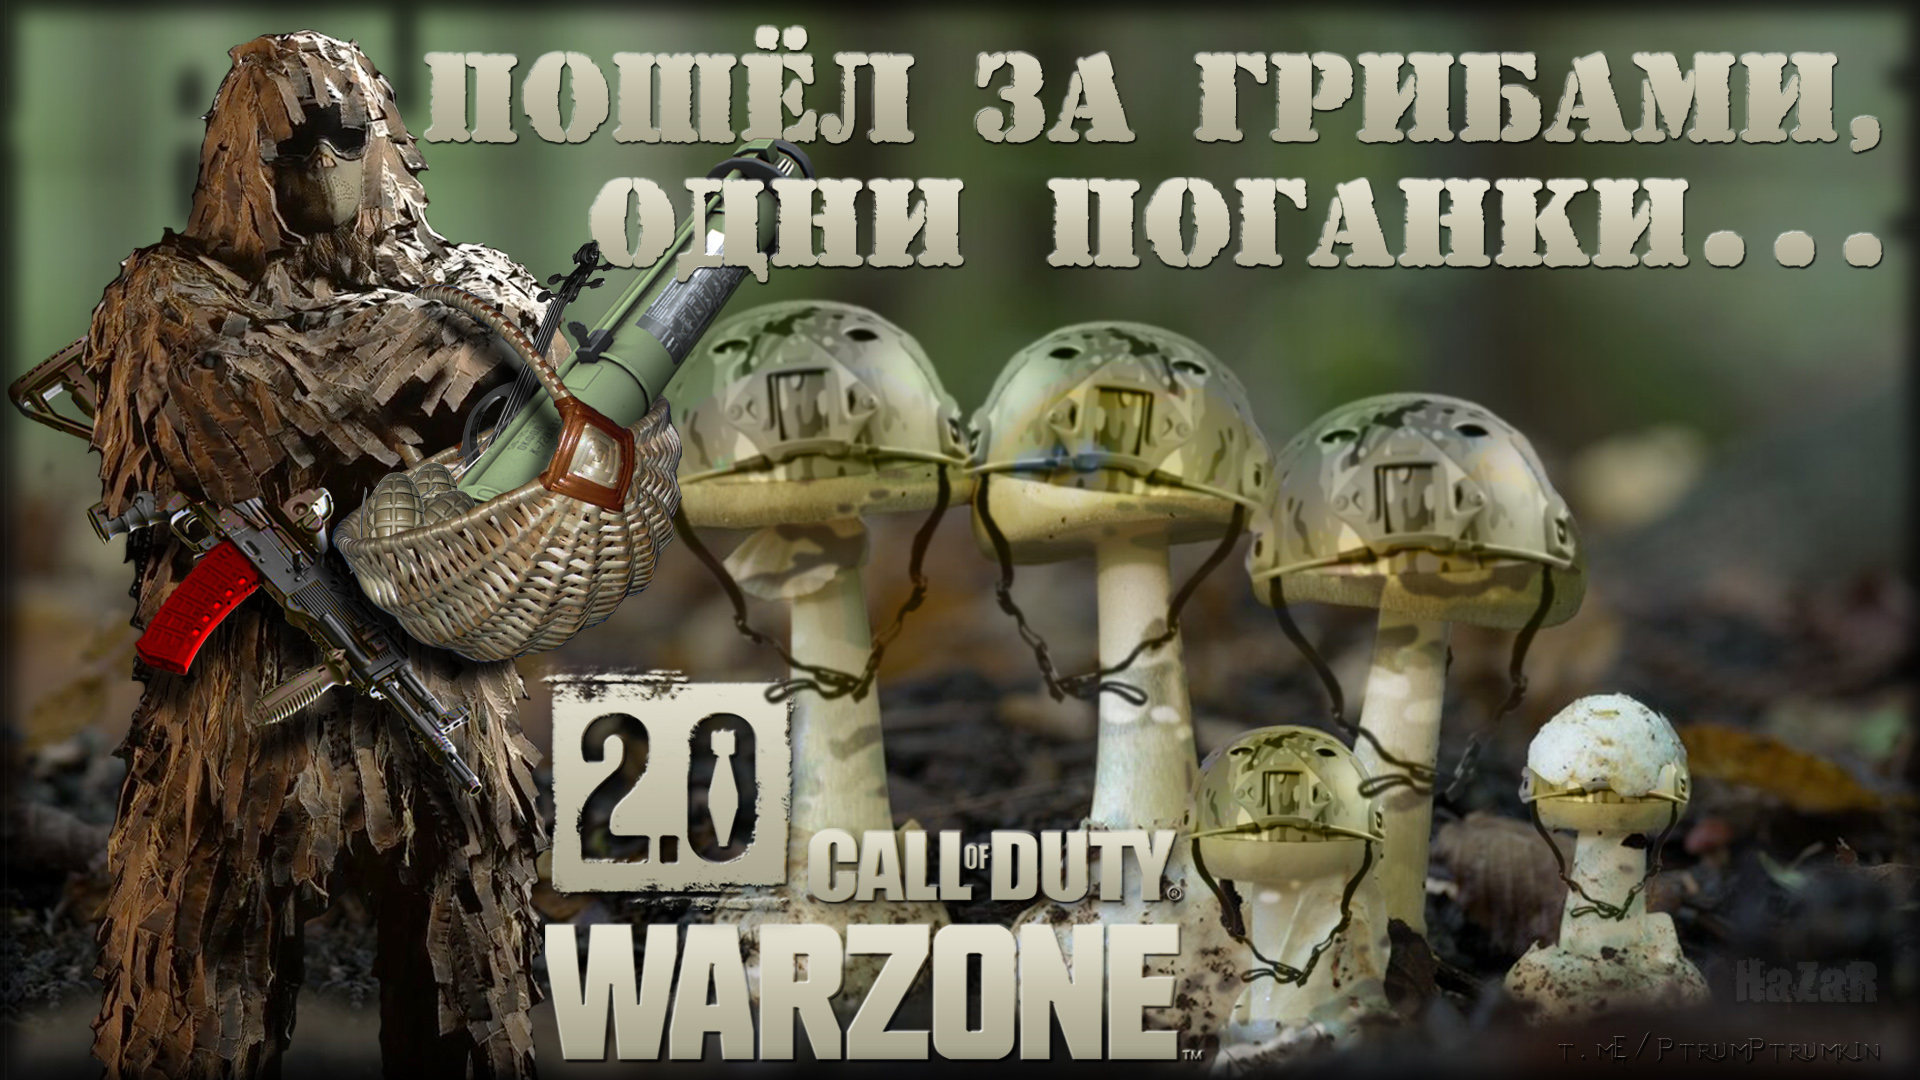 Пошёл за грибами, одни поганки... ? Warzone 2.0 ? Call of Duty. Gray Zone. Gameplay Win. Solo.